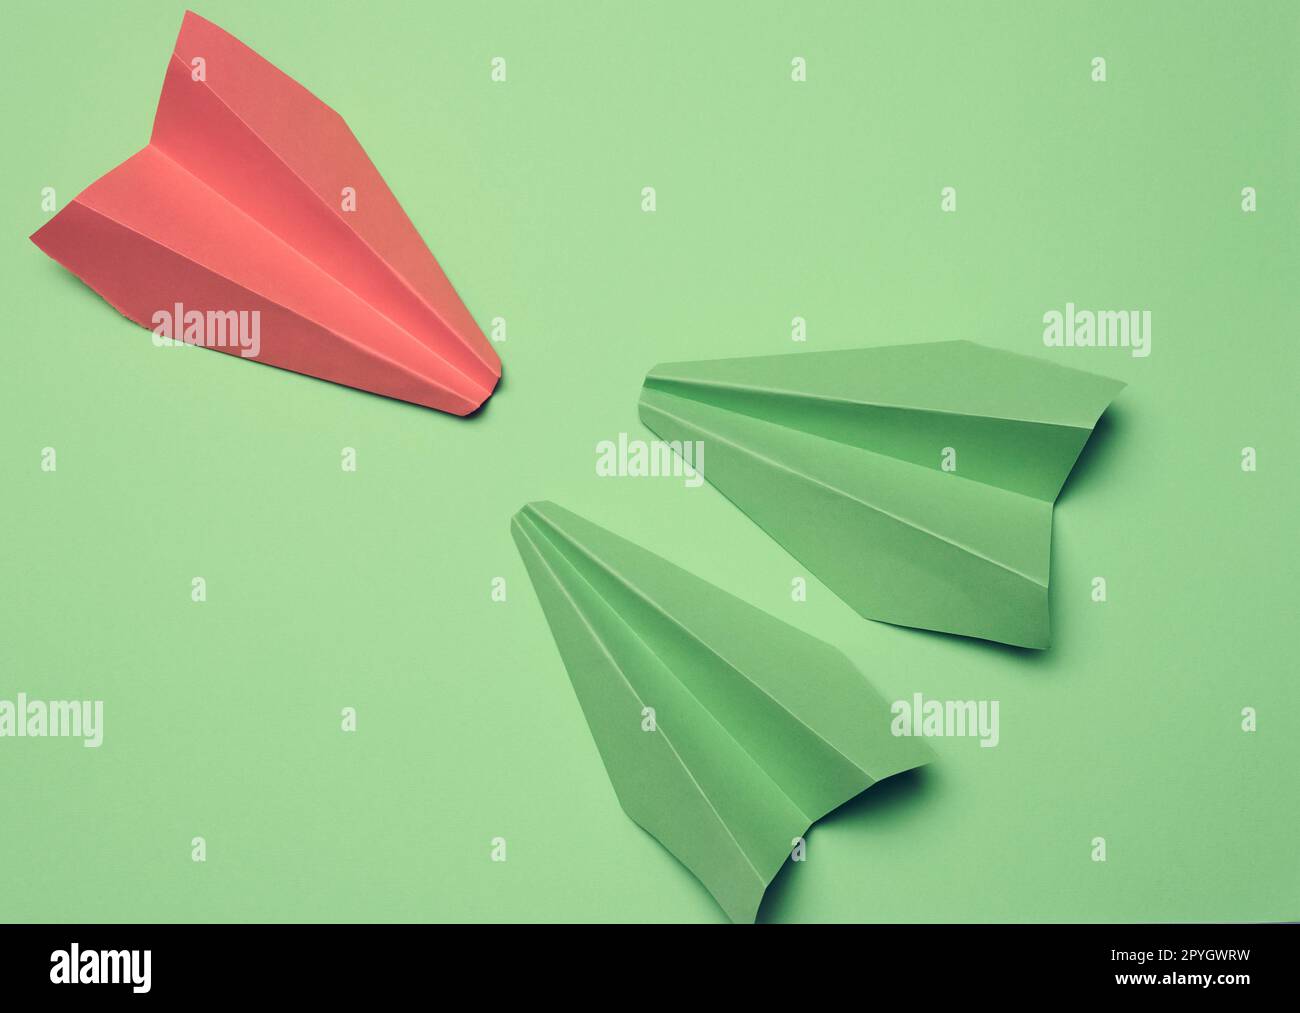 Paper planes, concept of confrontation, dialogue Stock Photo